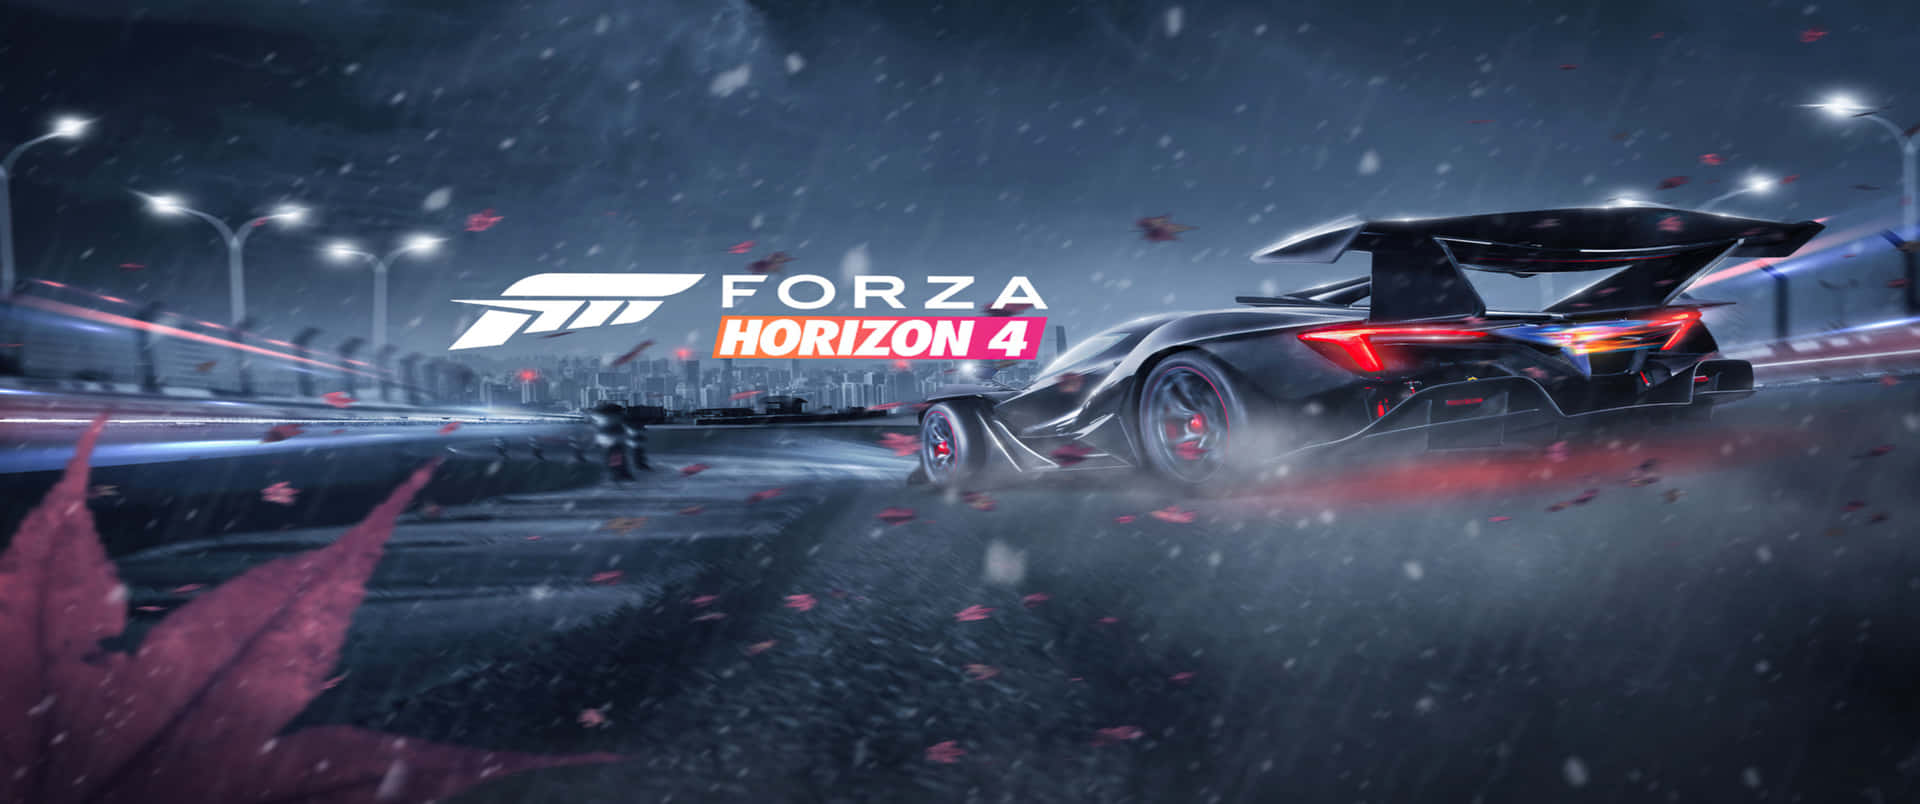 3440x1440p Dark Aesthetic Forza Horizon 4 Poster Background